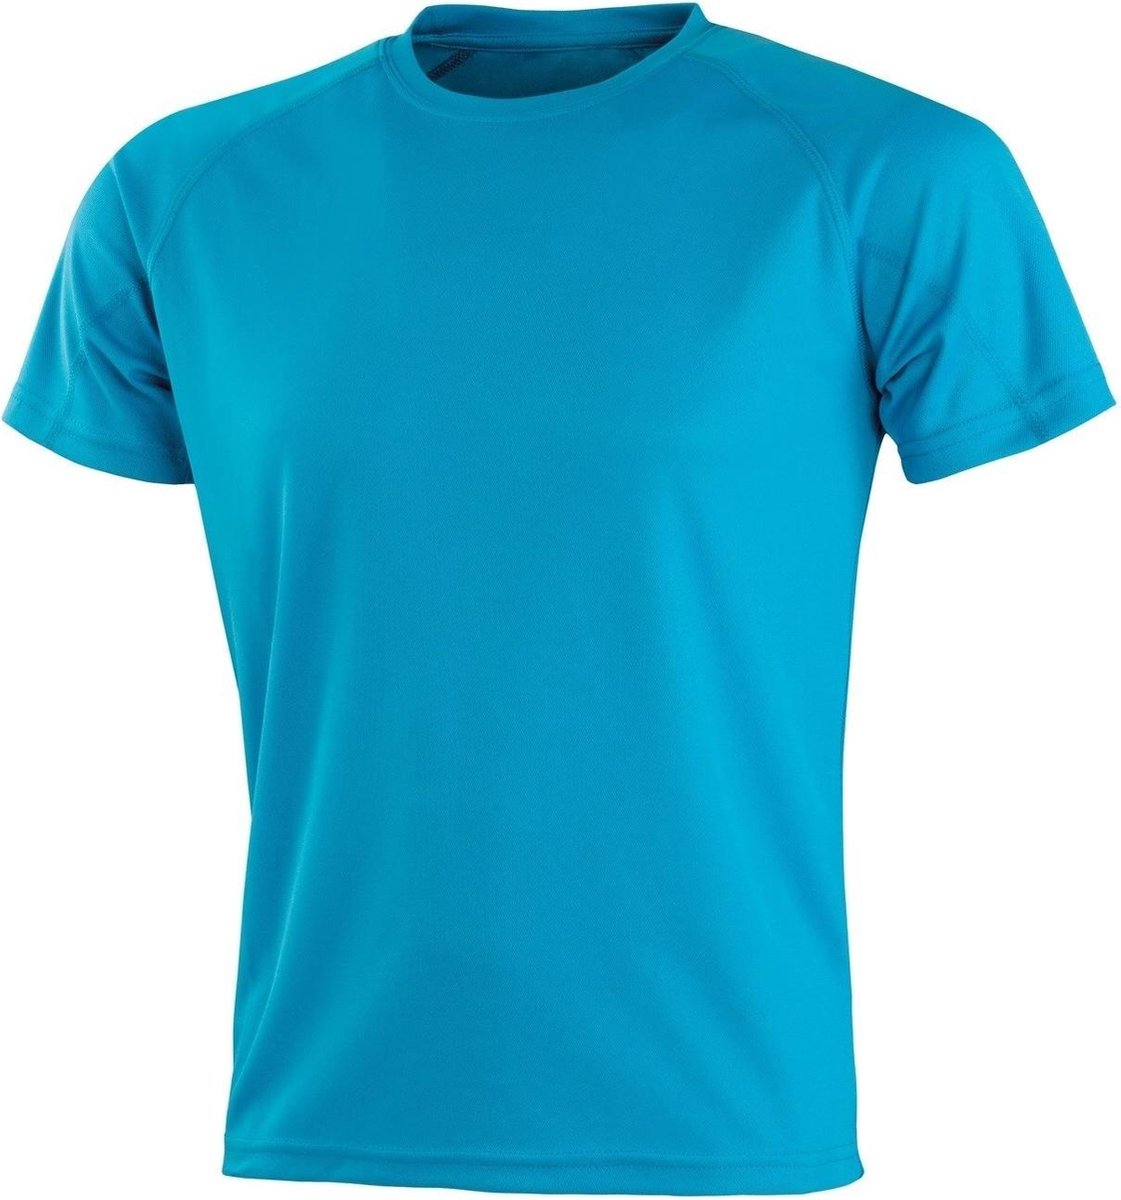 Senvi Sports Performance T-Shirt- Turquoise - XL - Unisex